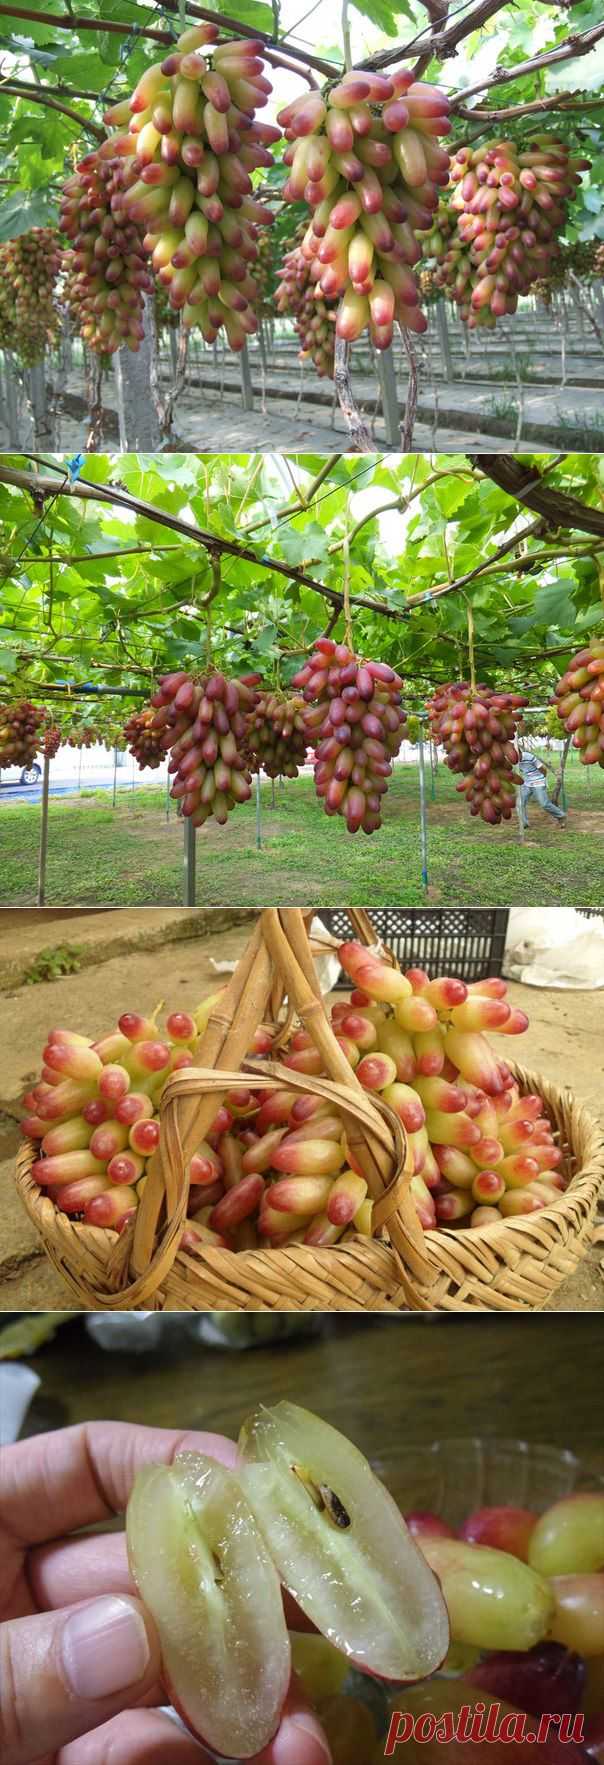 Японский виноград "Маникюр Фингер"
Вес грозди от 400 – 700г до 1750г.